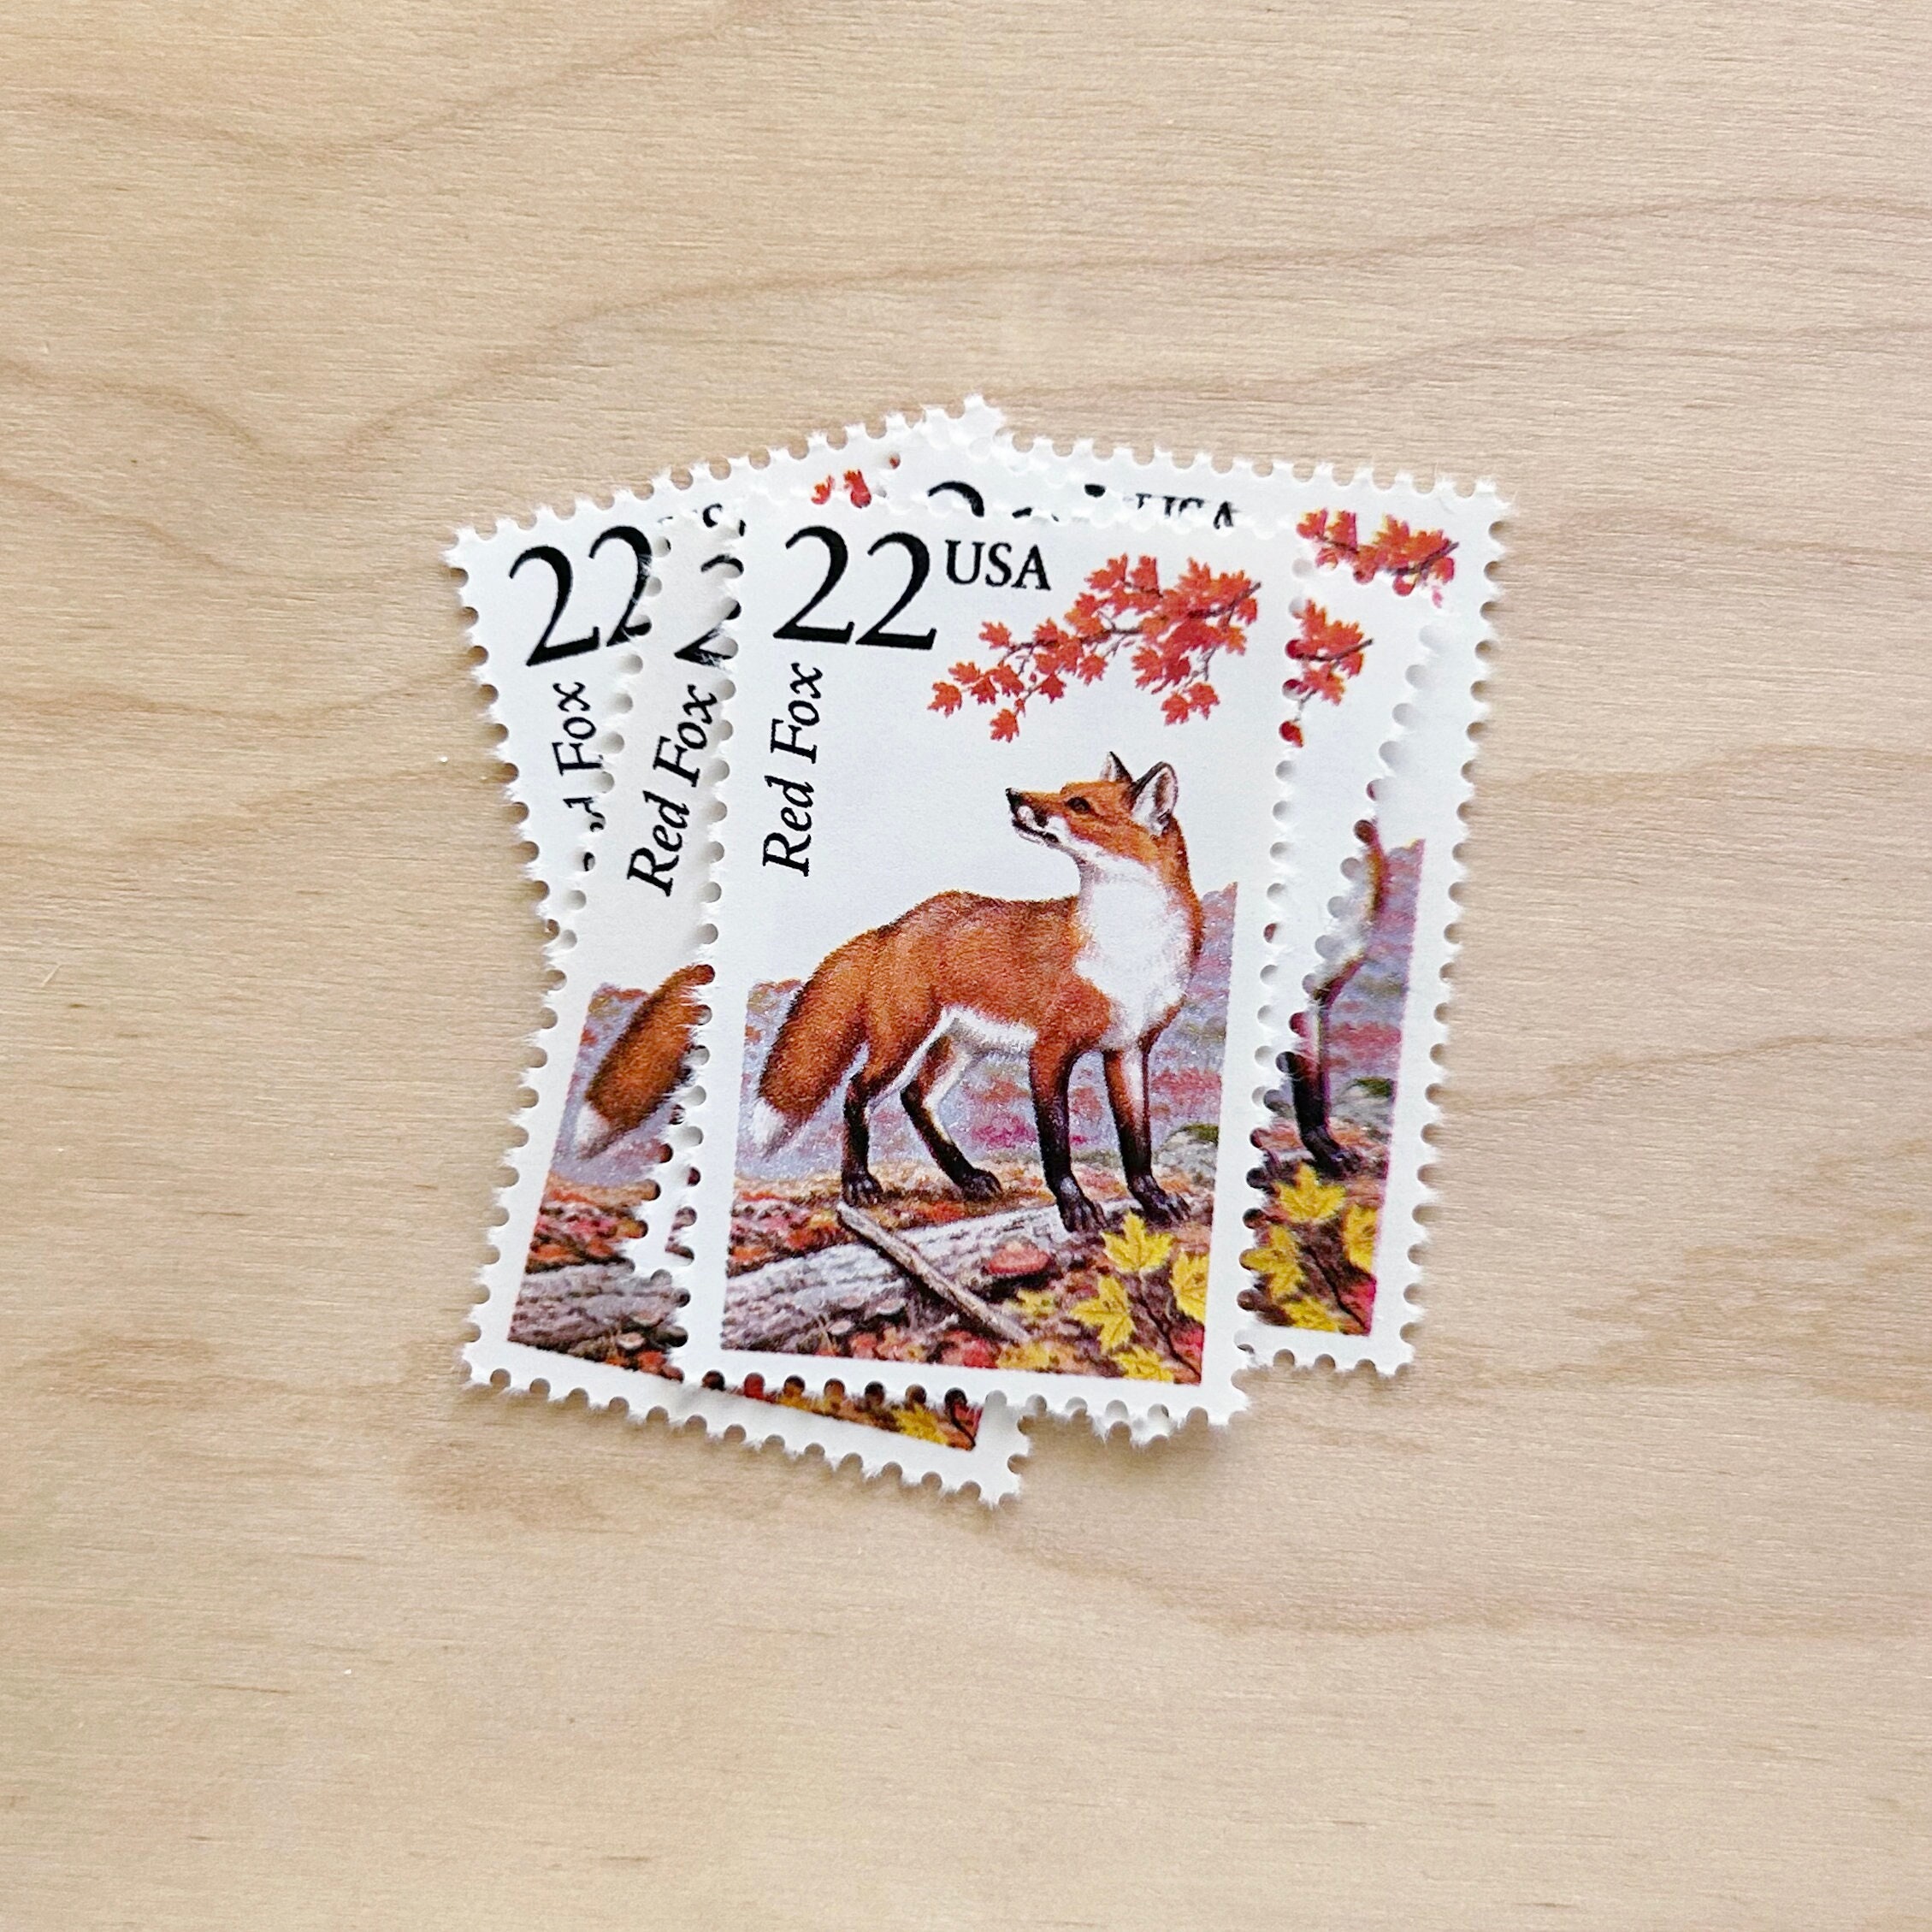 66 cents . Pink Vintage Postage Stamp Variety Pack . Set of 5 Postage Stamps  by Kristen Melchor